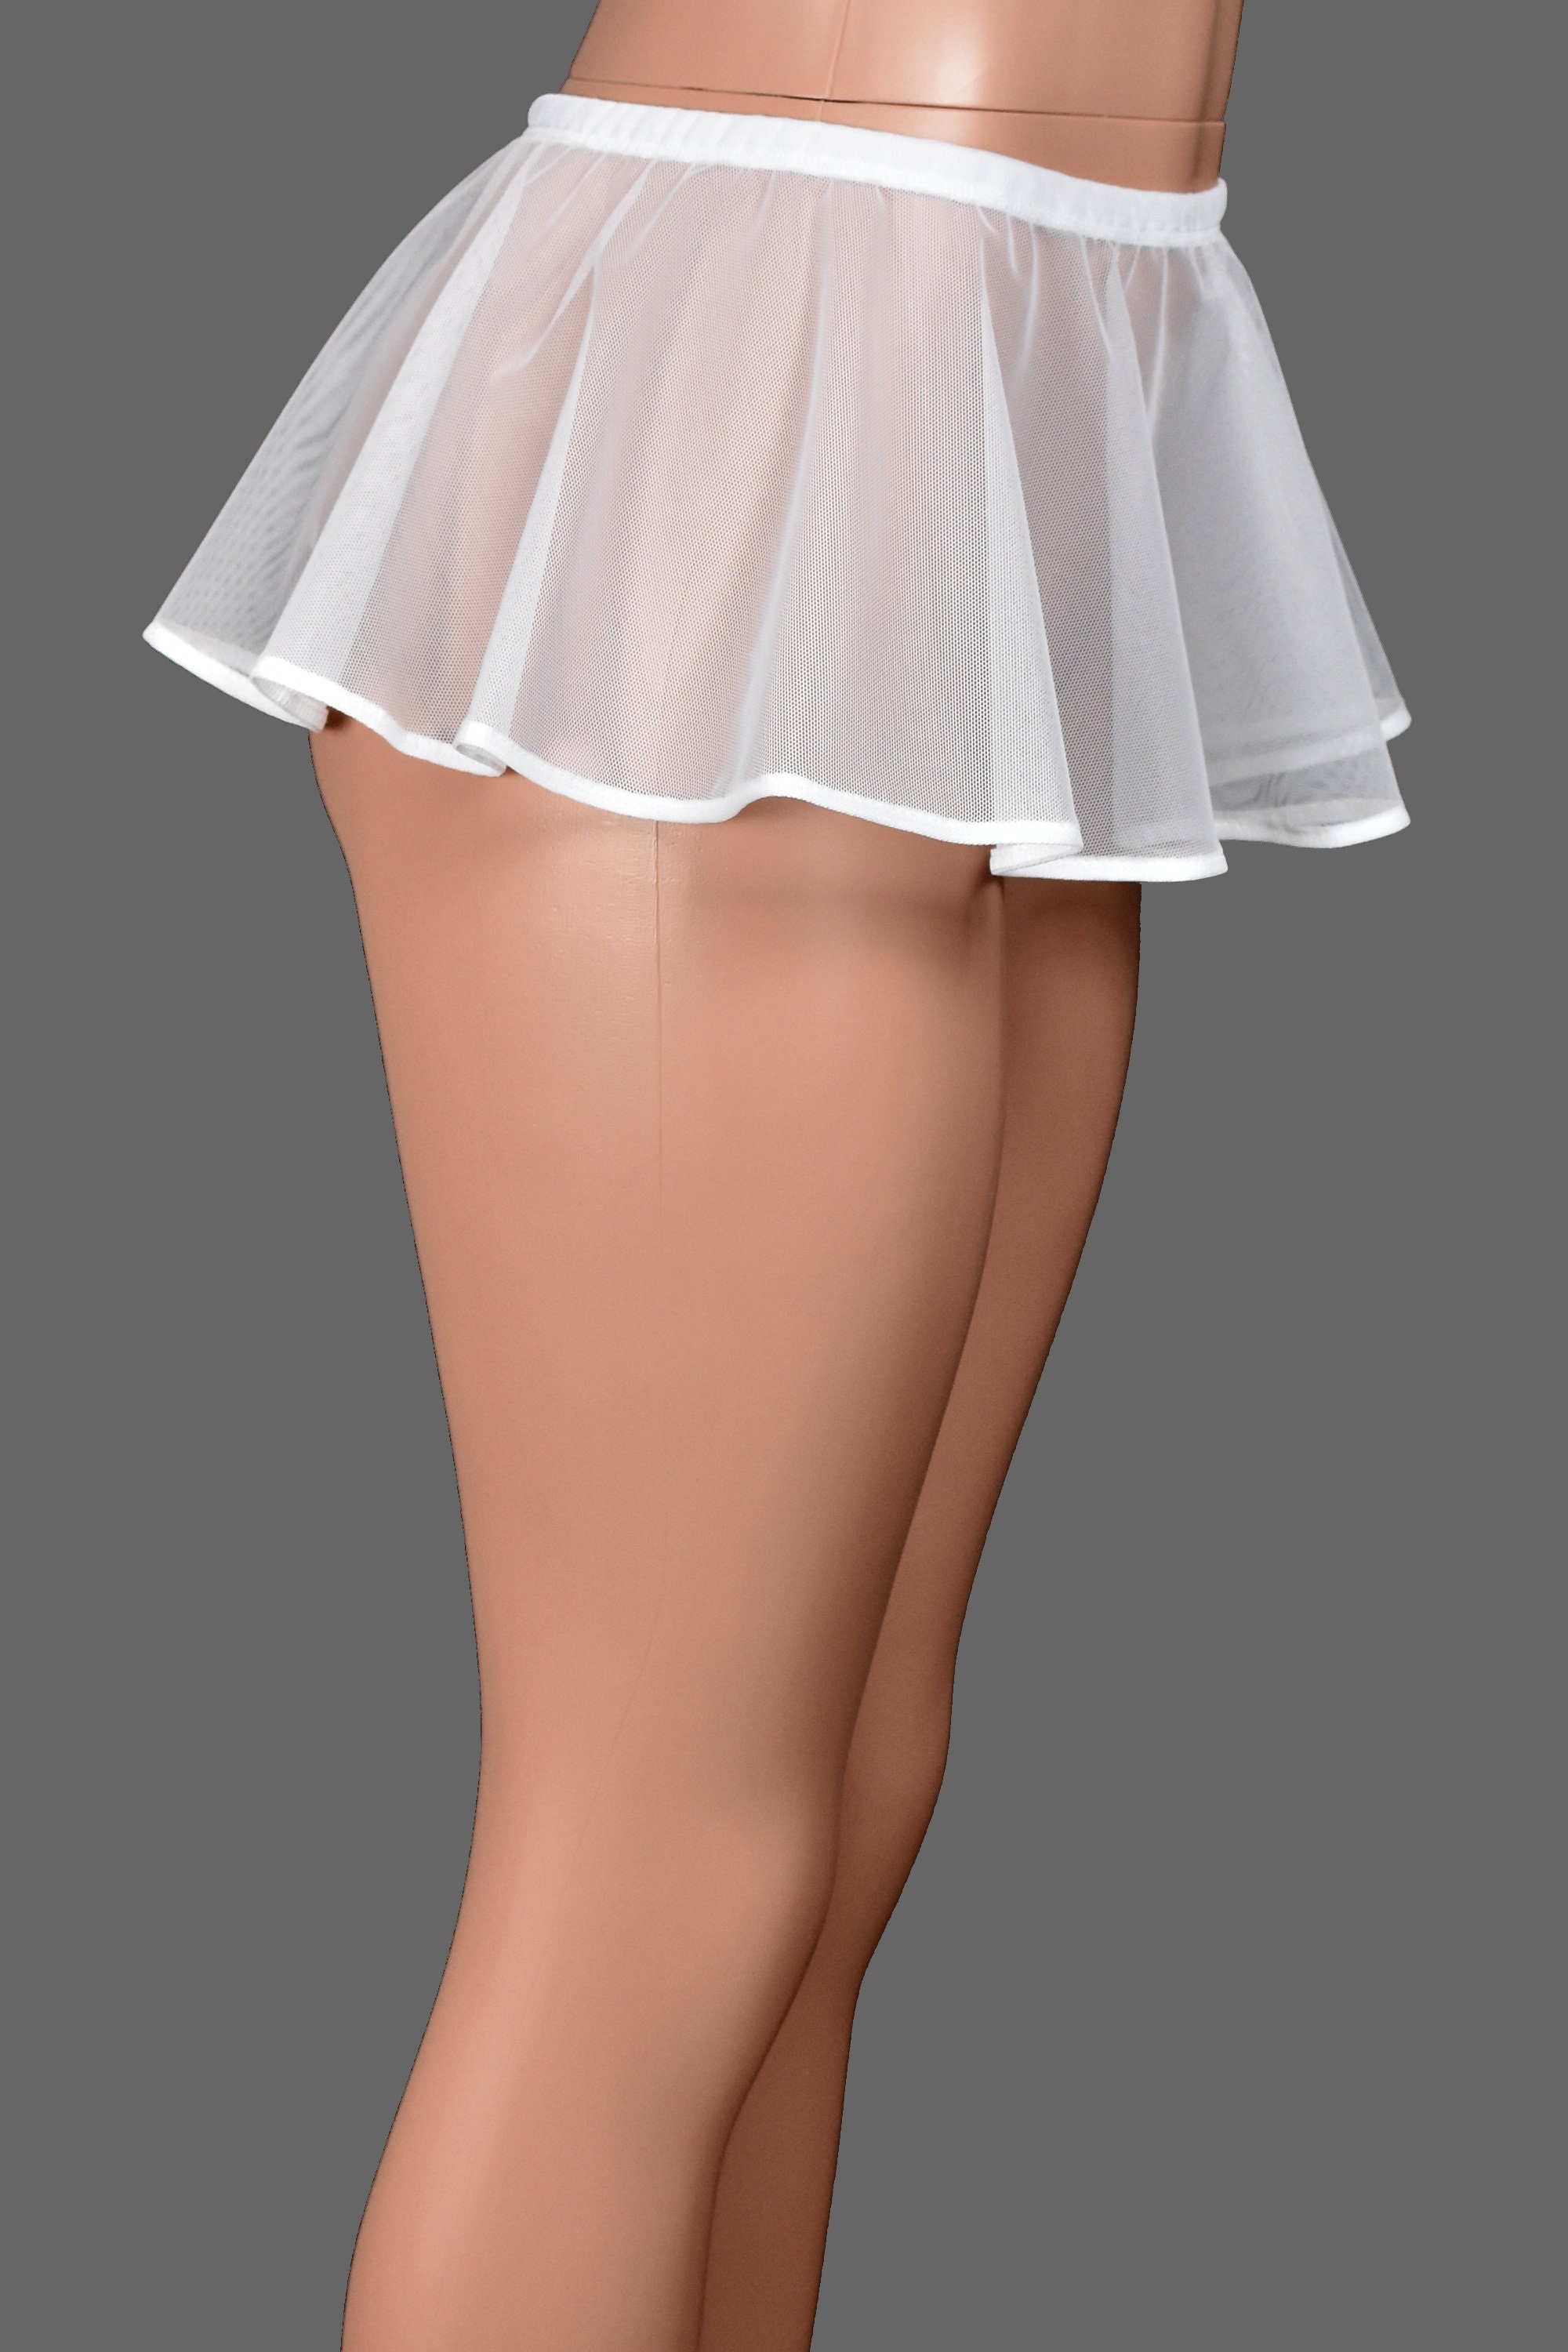 White Mesh Micro Mini Skirt 8 Long Circle Skirt XS S M L XL 2XL